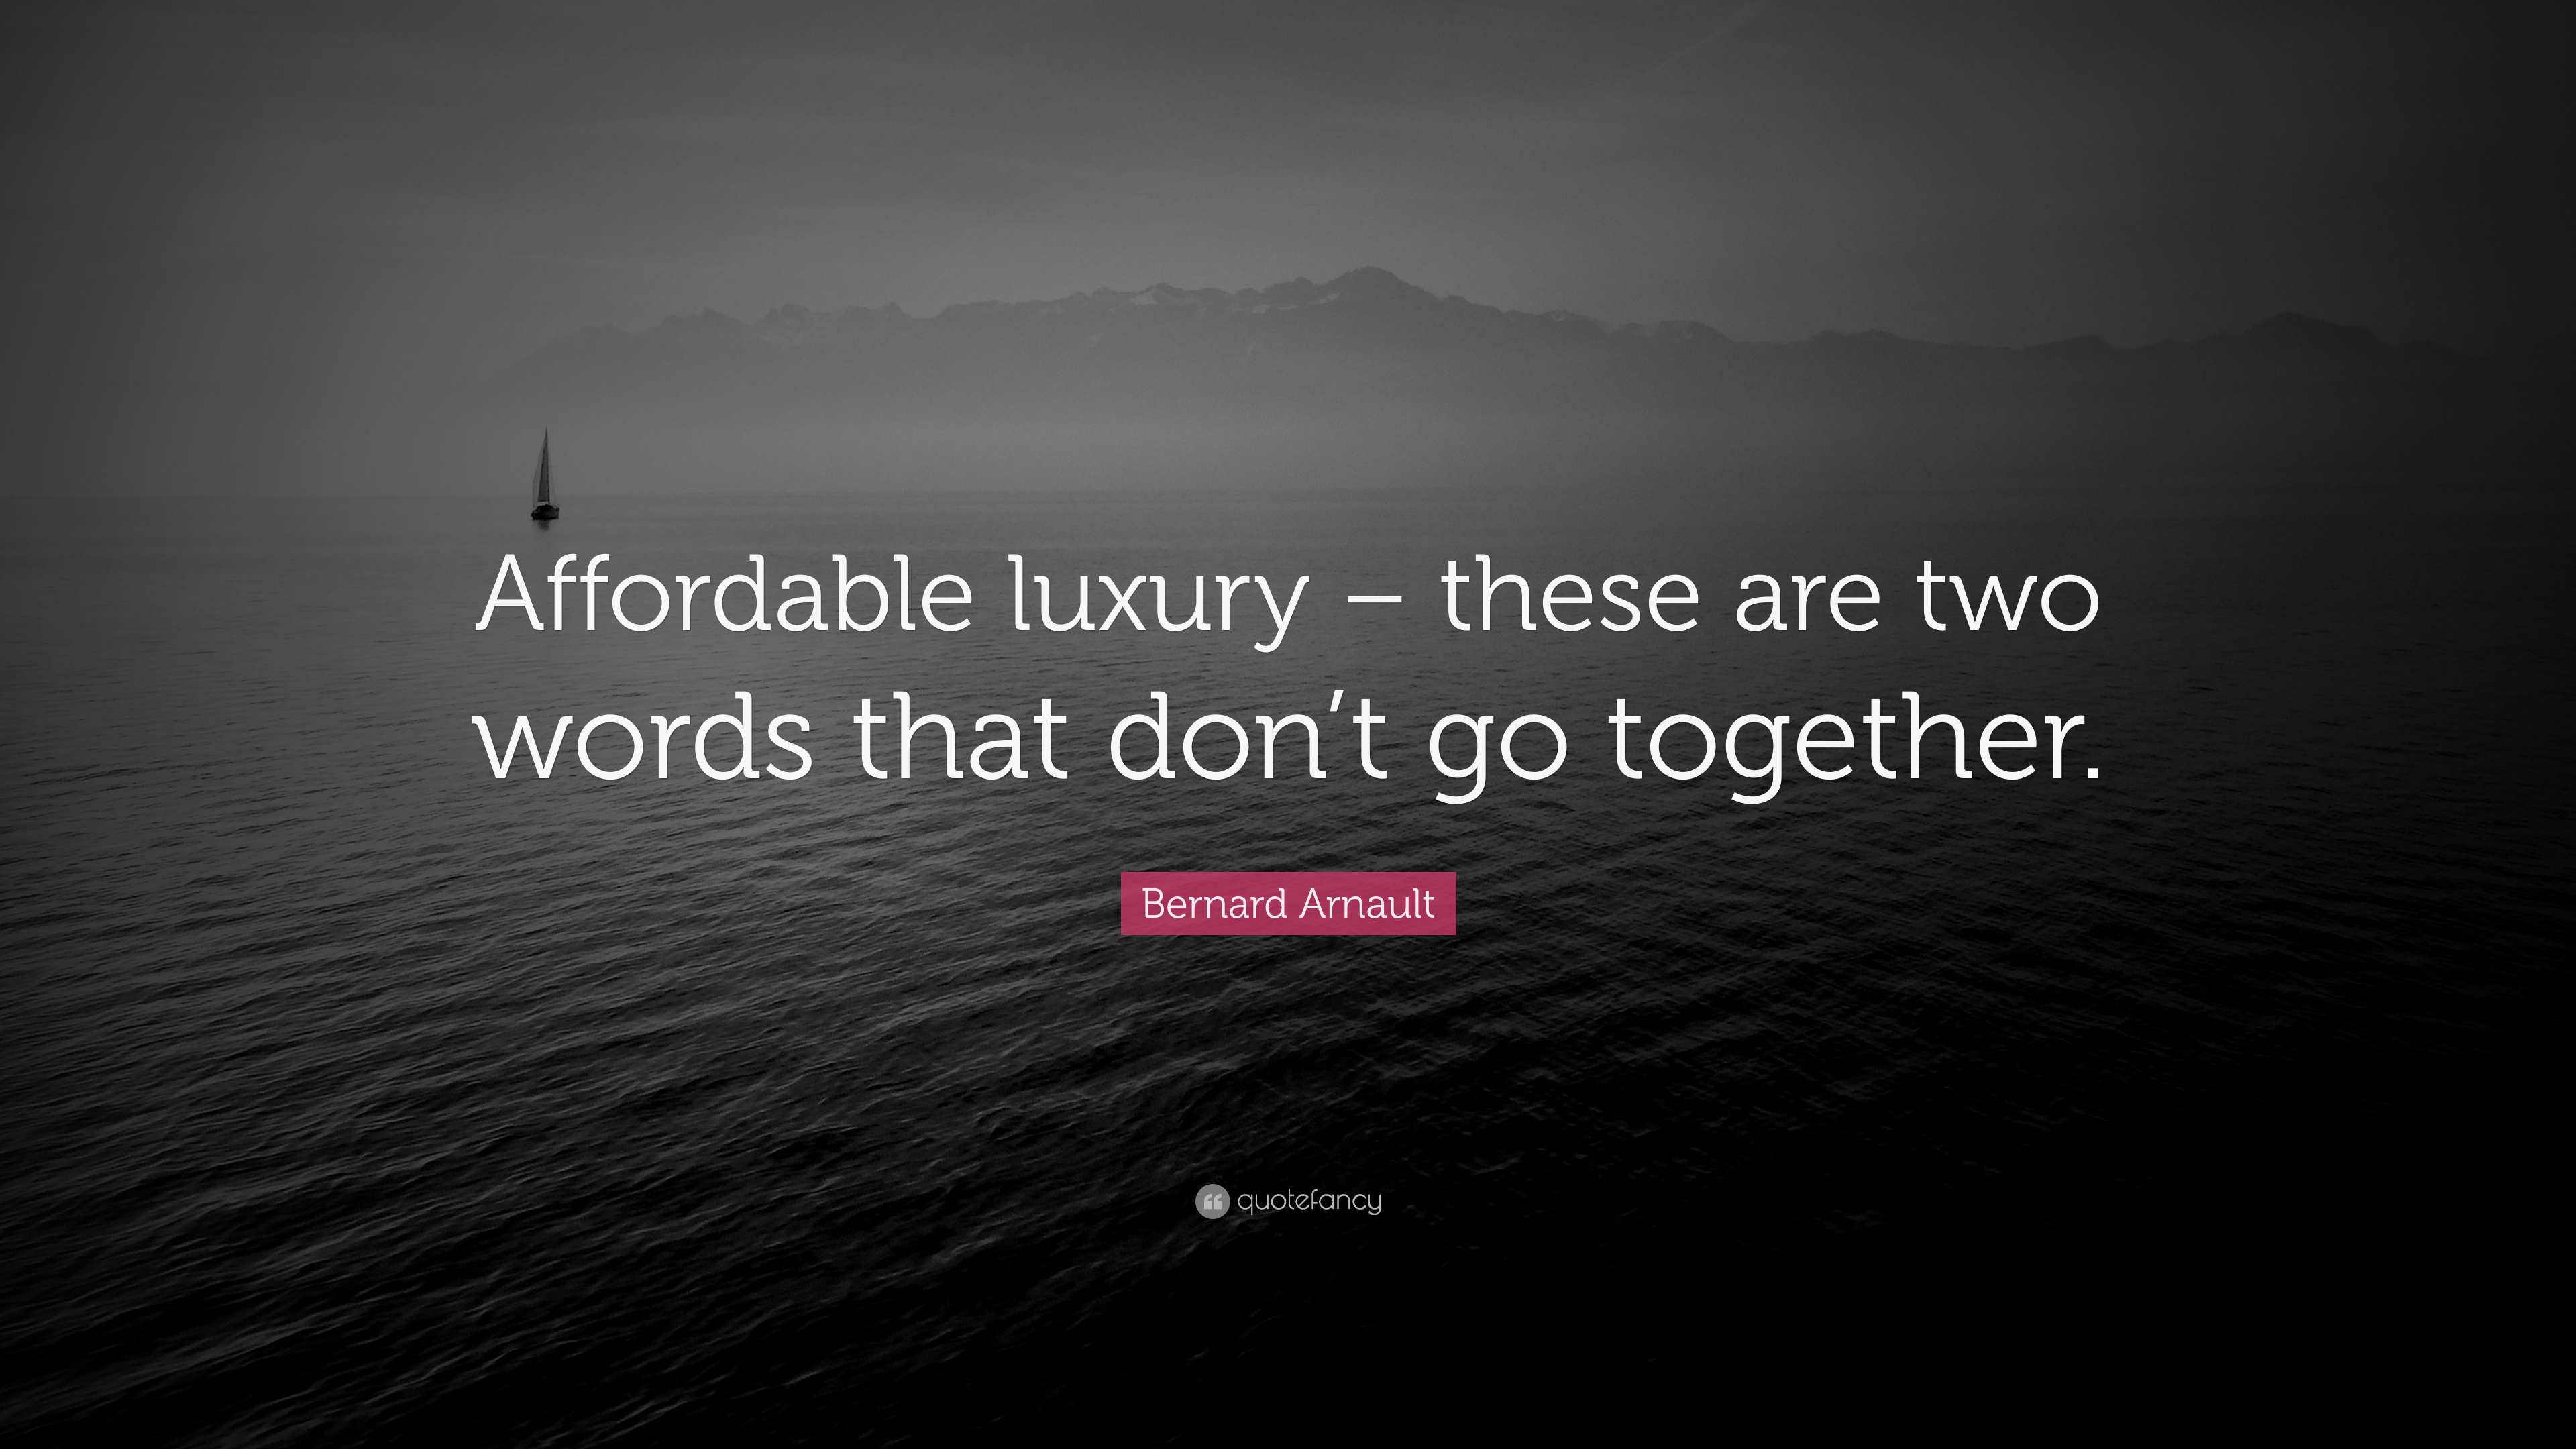 Bernard Arnault Quote: “Affordable luxury